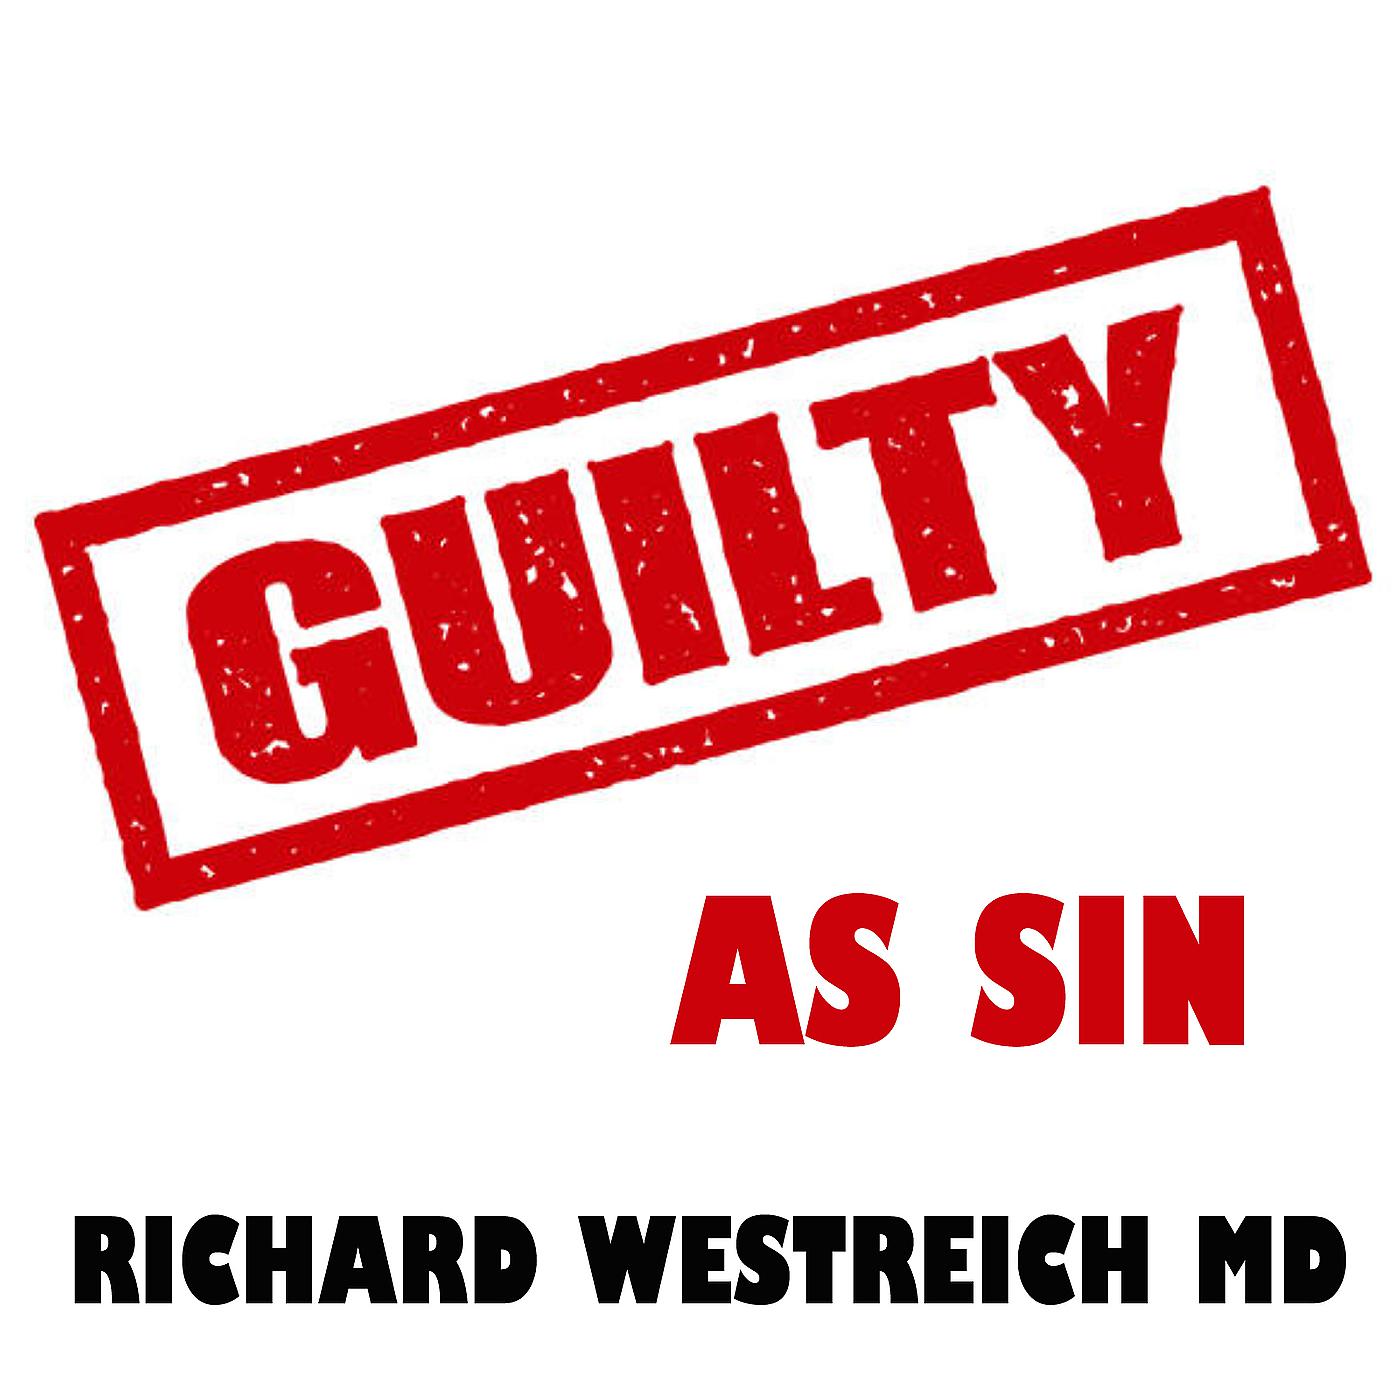 Постер альбома Guilty as Sin